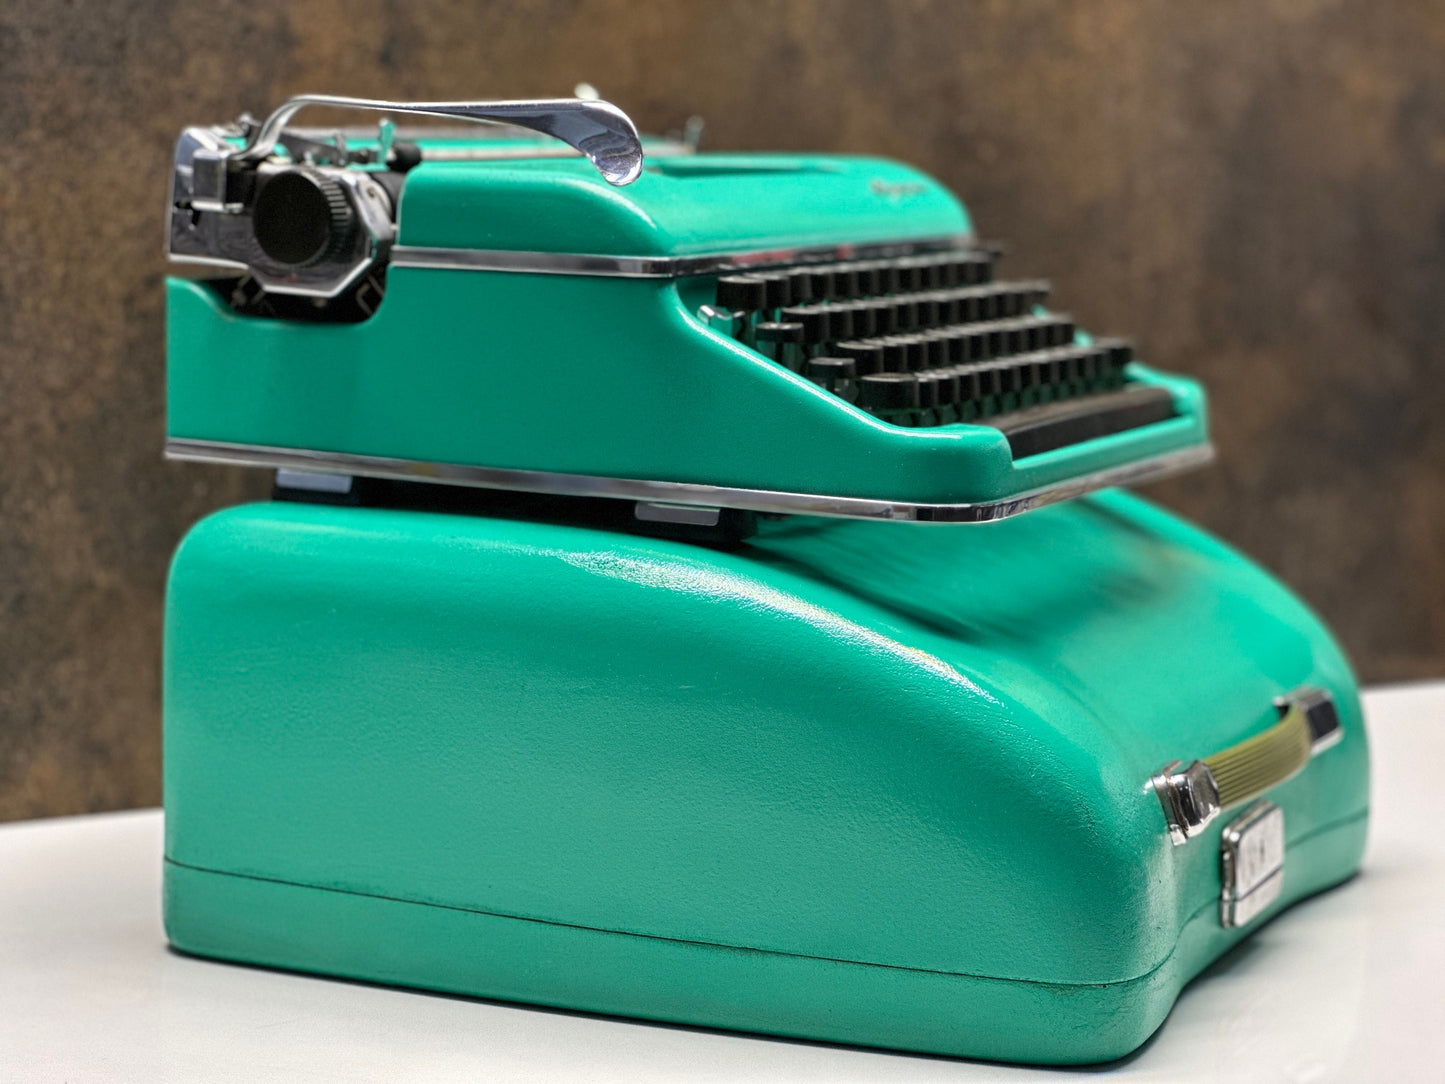 Olympia SM3 Typewriter with Case - The Ultimate Premium Gift,typewriter working